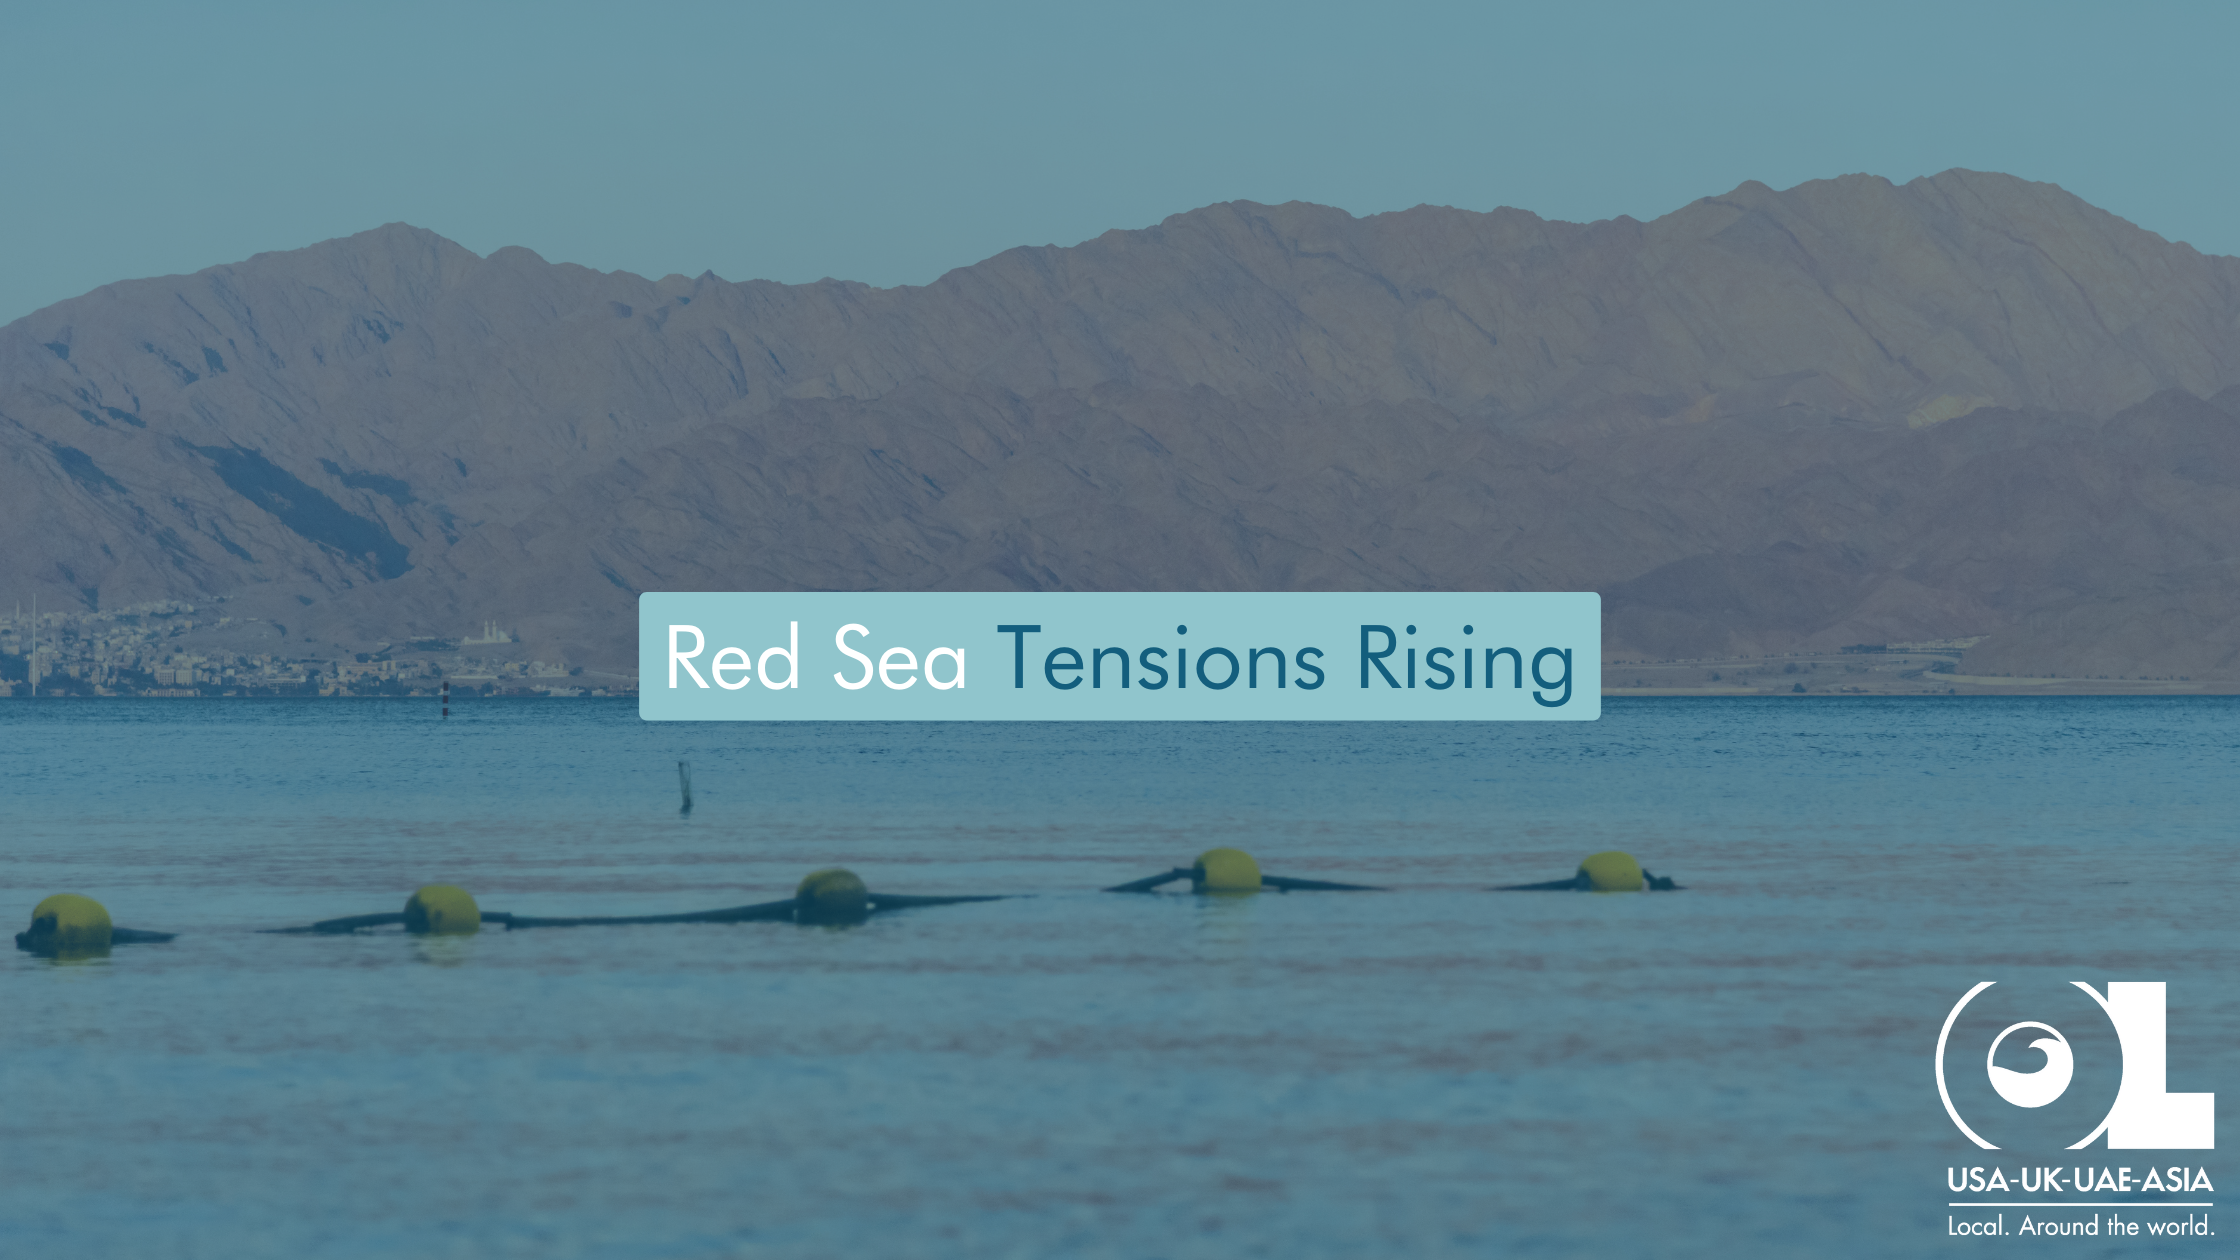 Red-Sea-Tensions-Rising-OL-USA